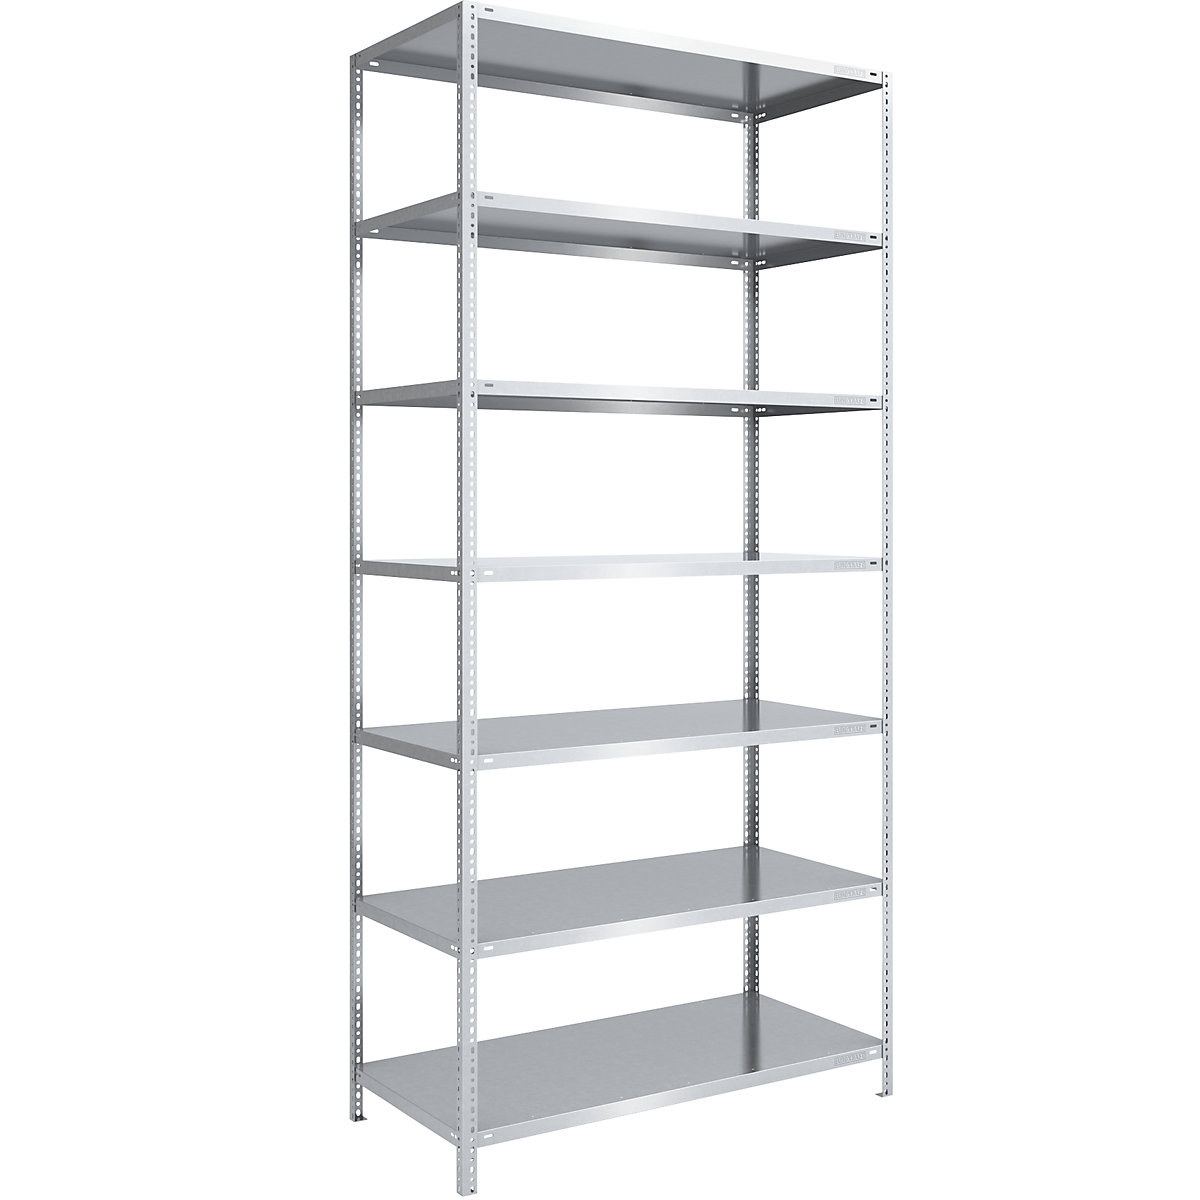 Bolt-together shelf unit, light duty, zinc plated – eurokraft pro, shelf unit height 3000 mm, shelf width 1300 mm, depth 800 mm, standard shelf unit-10